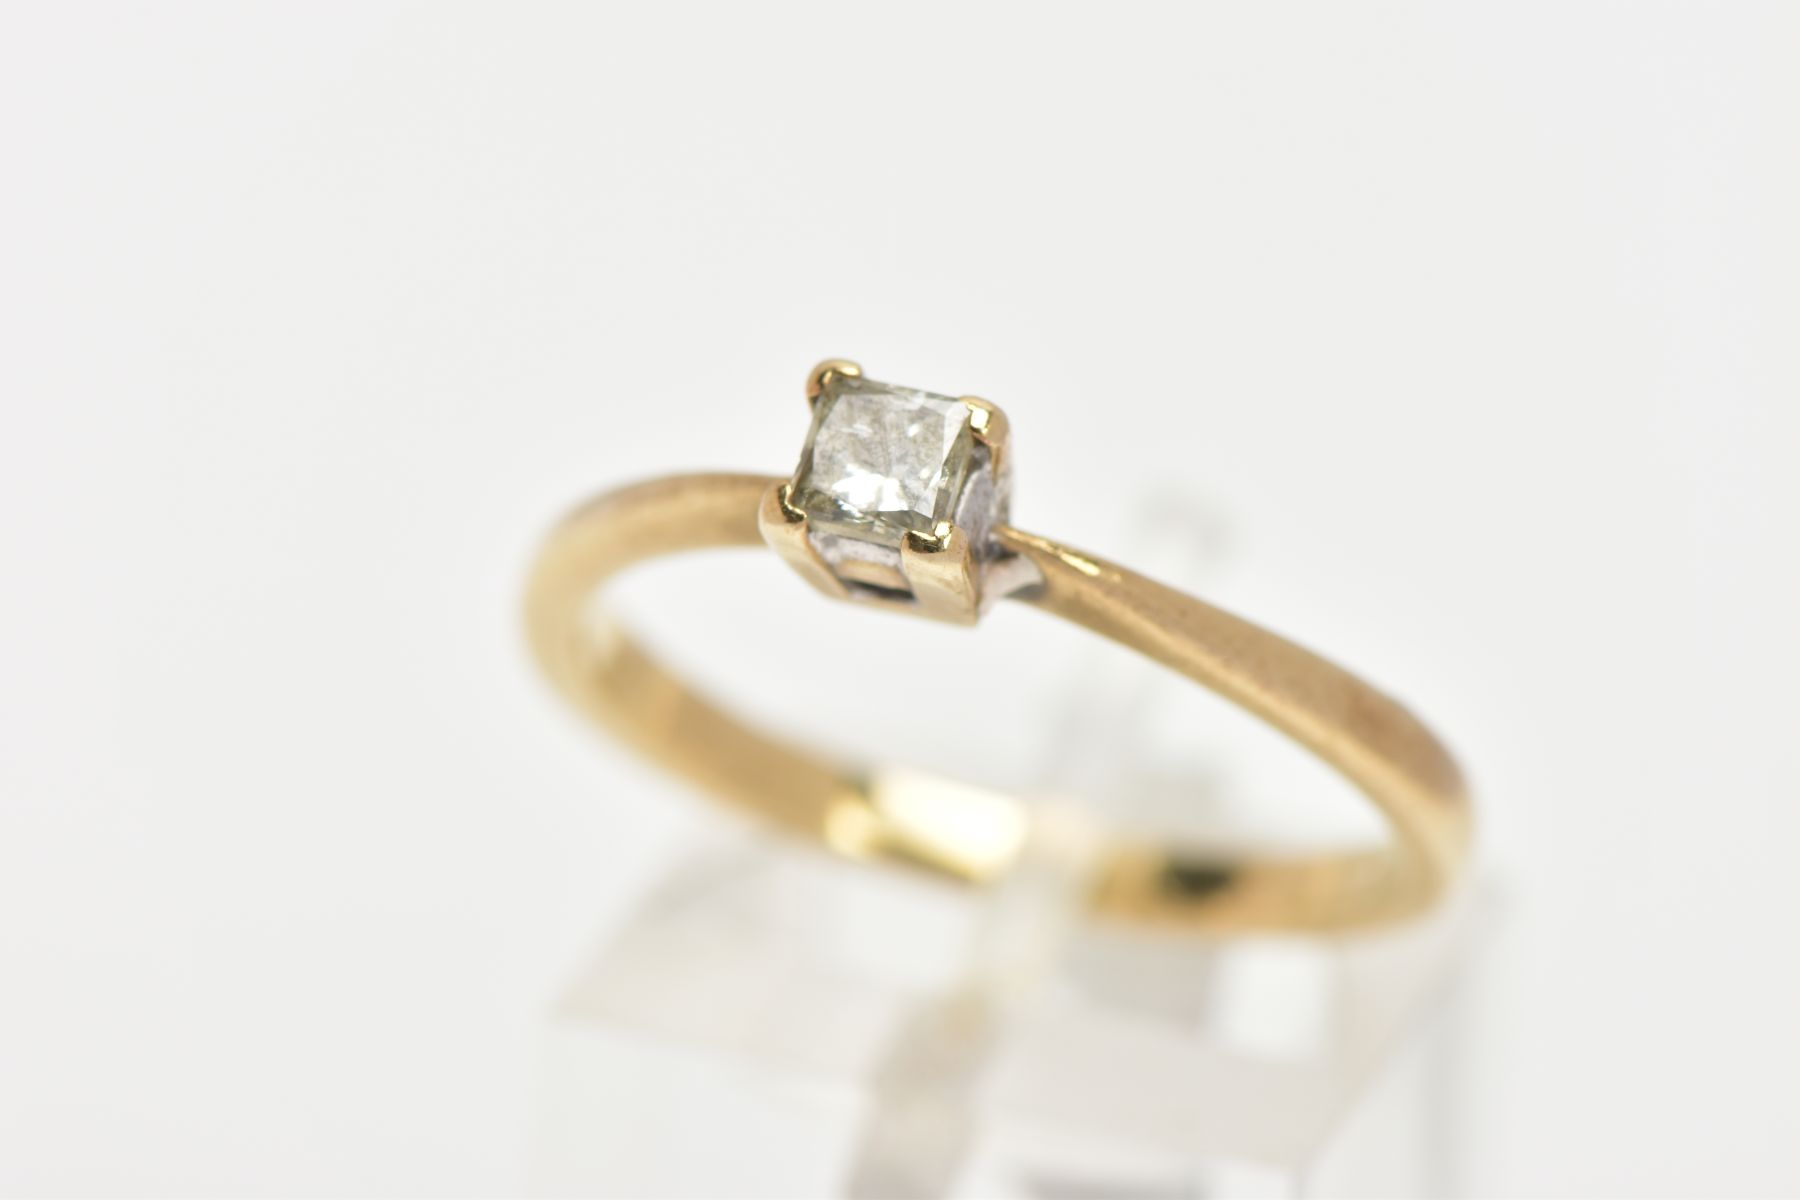 A YELLOW METAL SINGLE STONE DIAMOND RING, four claw set princess cut diamond, stamped diamond weight